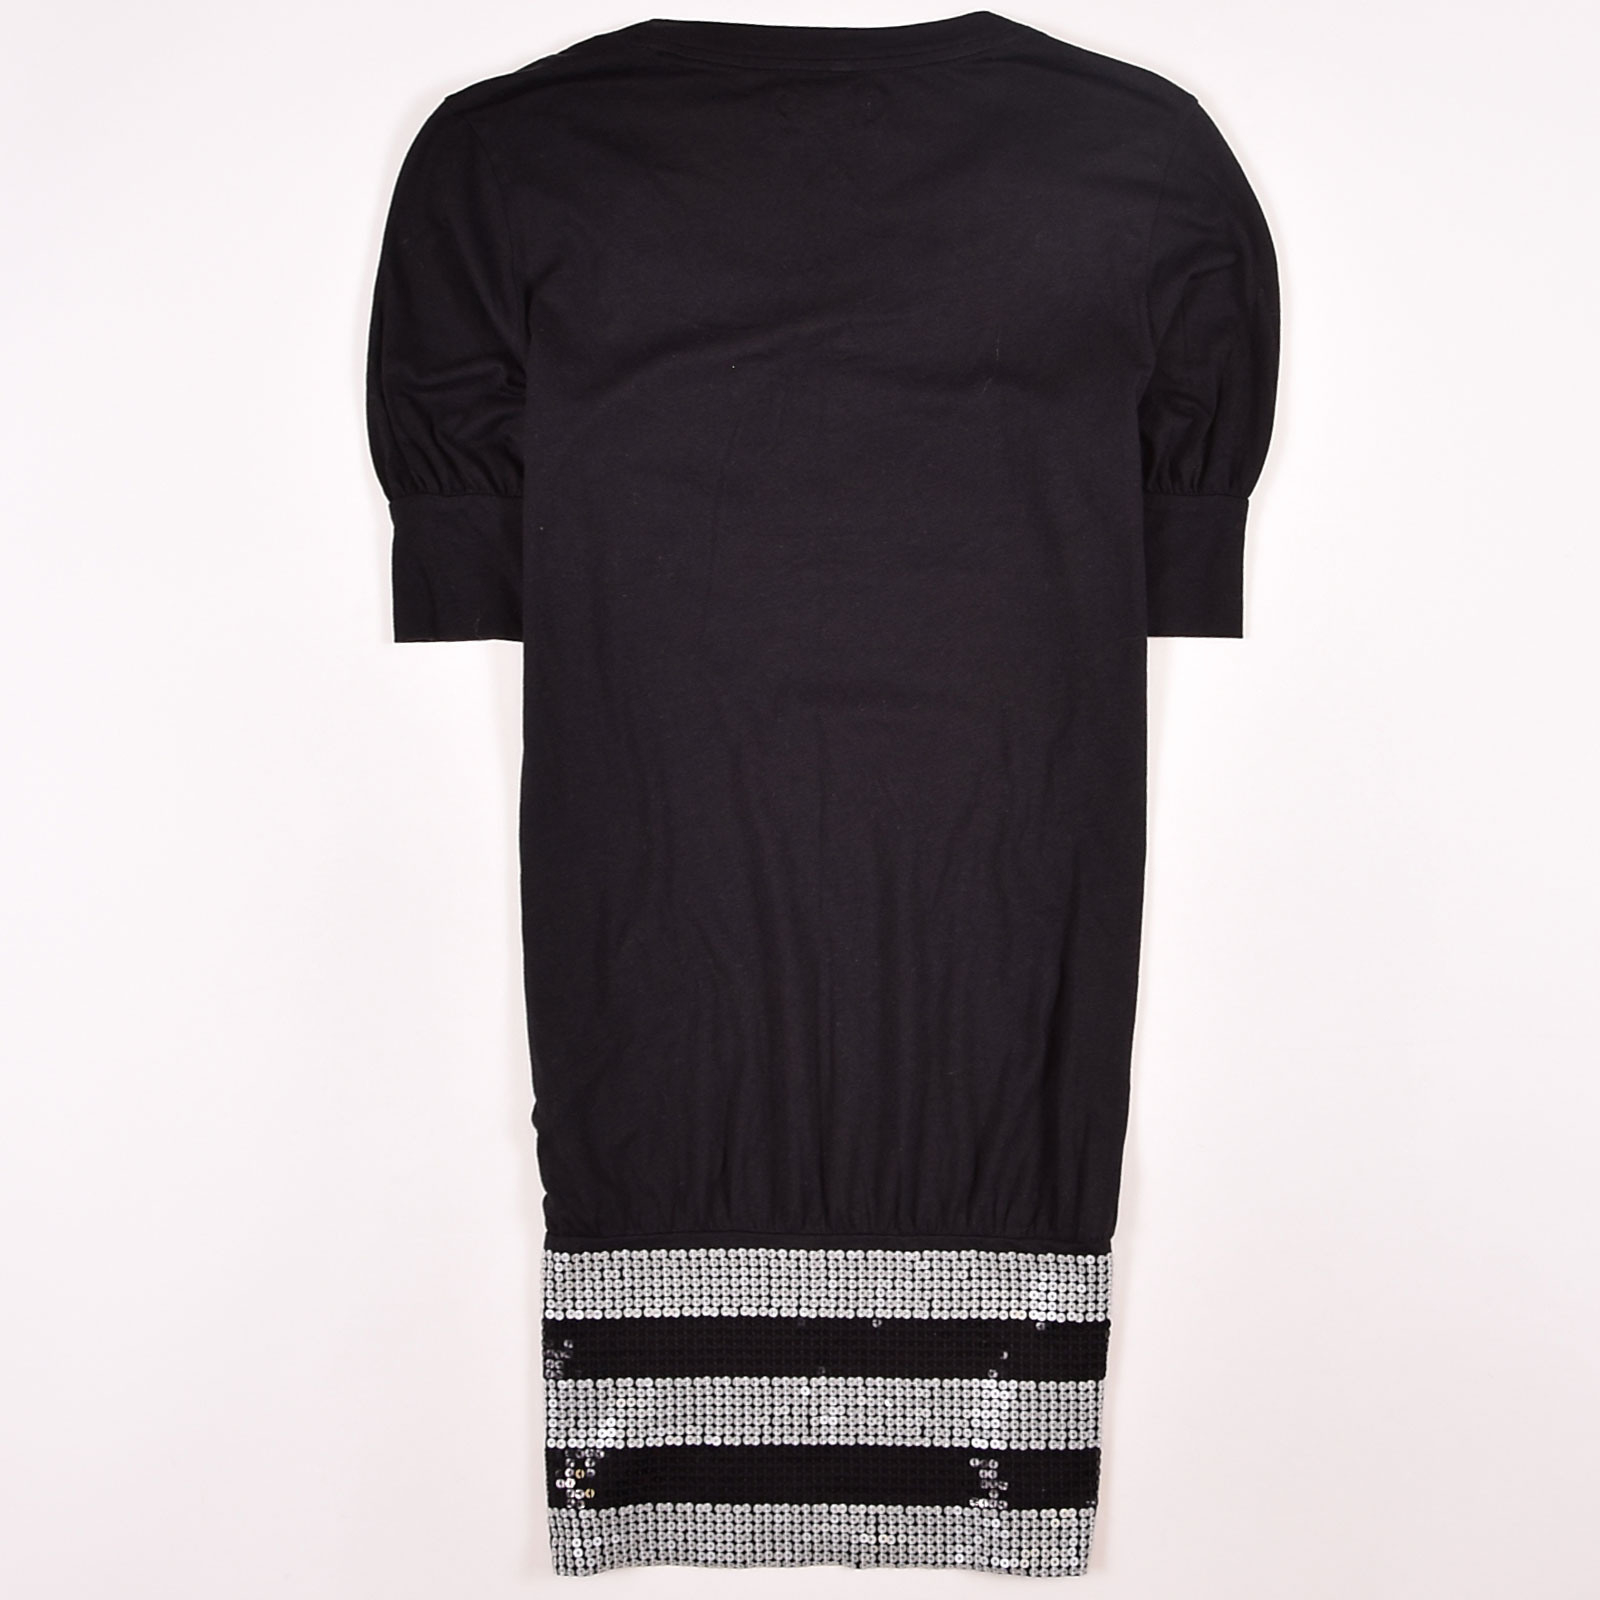 Adidas Damen Kleid Dress Gr32 Schwarz 96167  Ebay